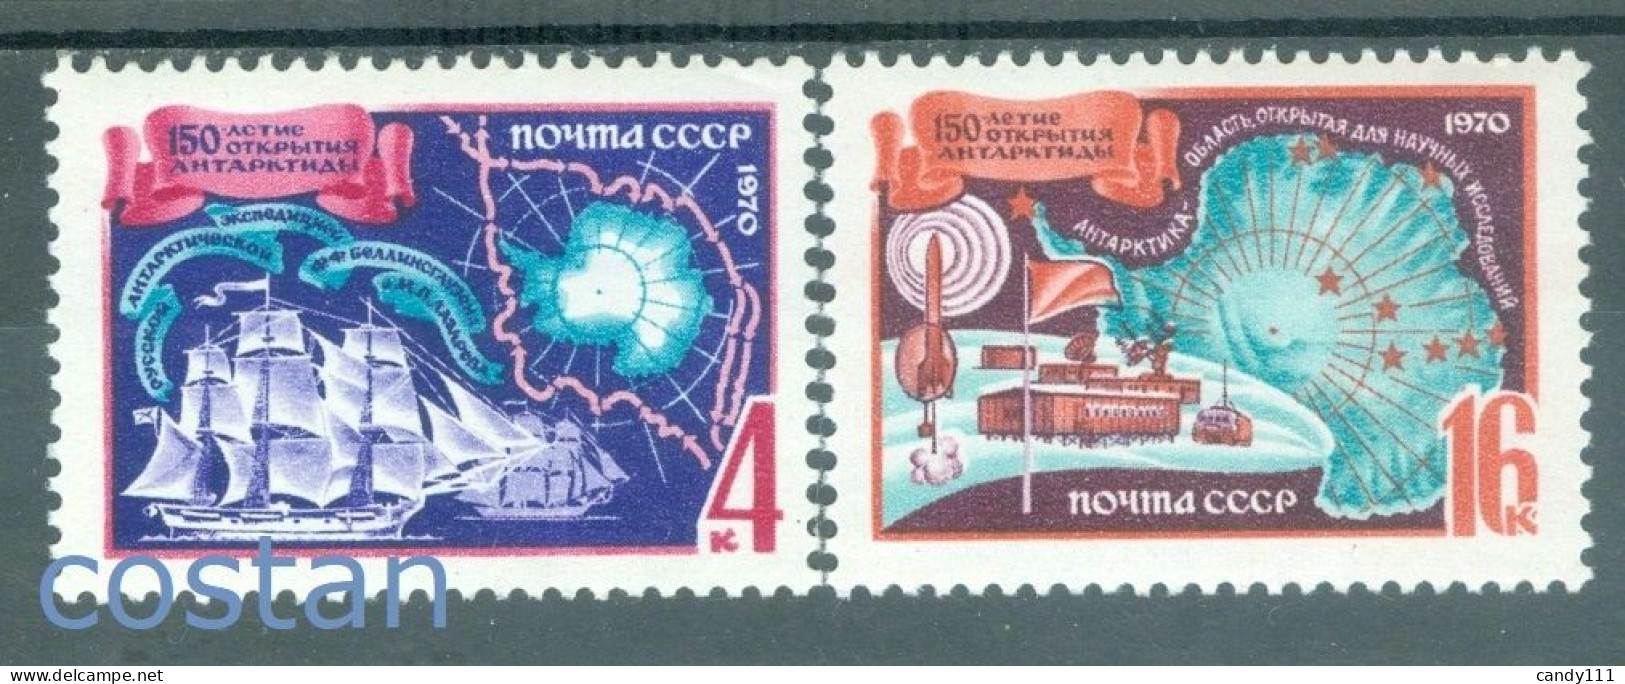 1970 Antarctica,Fabian Von Bellingshausen/Mikhail Lazarev,ships,Russia,3727,MNH - Unused Stamps